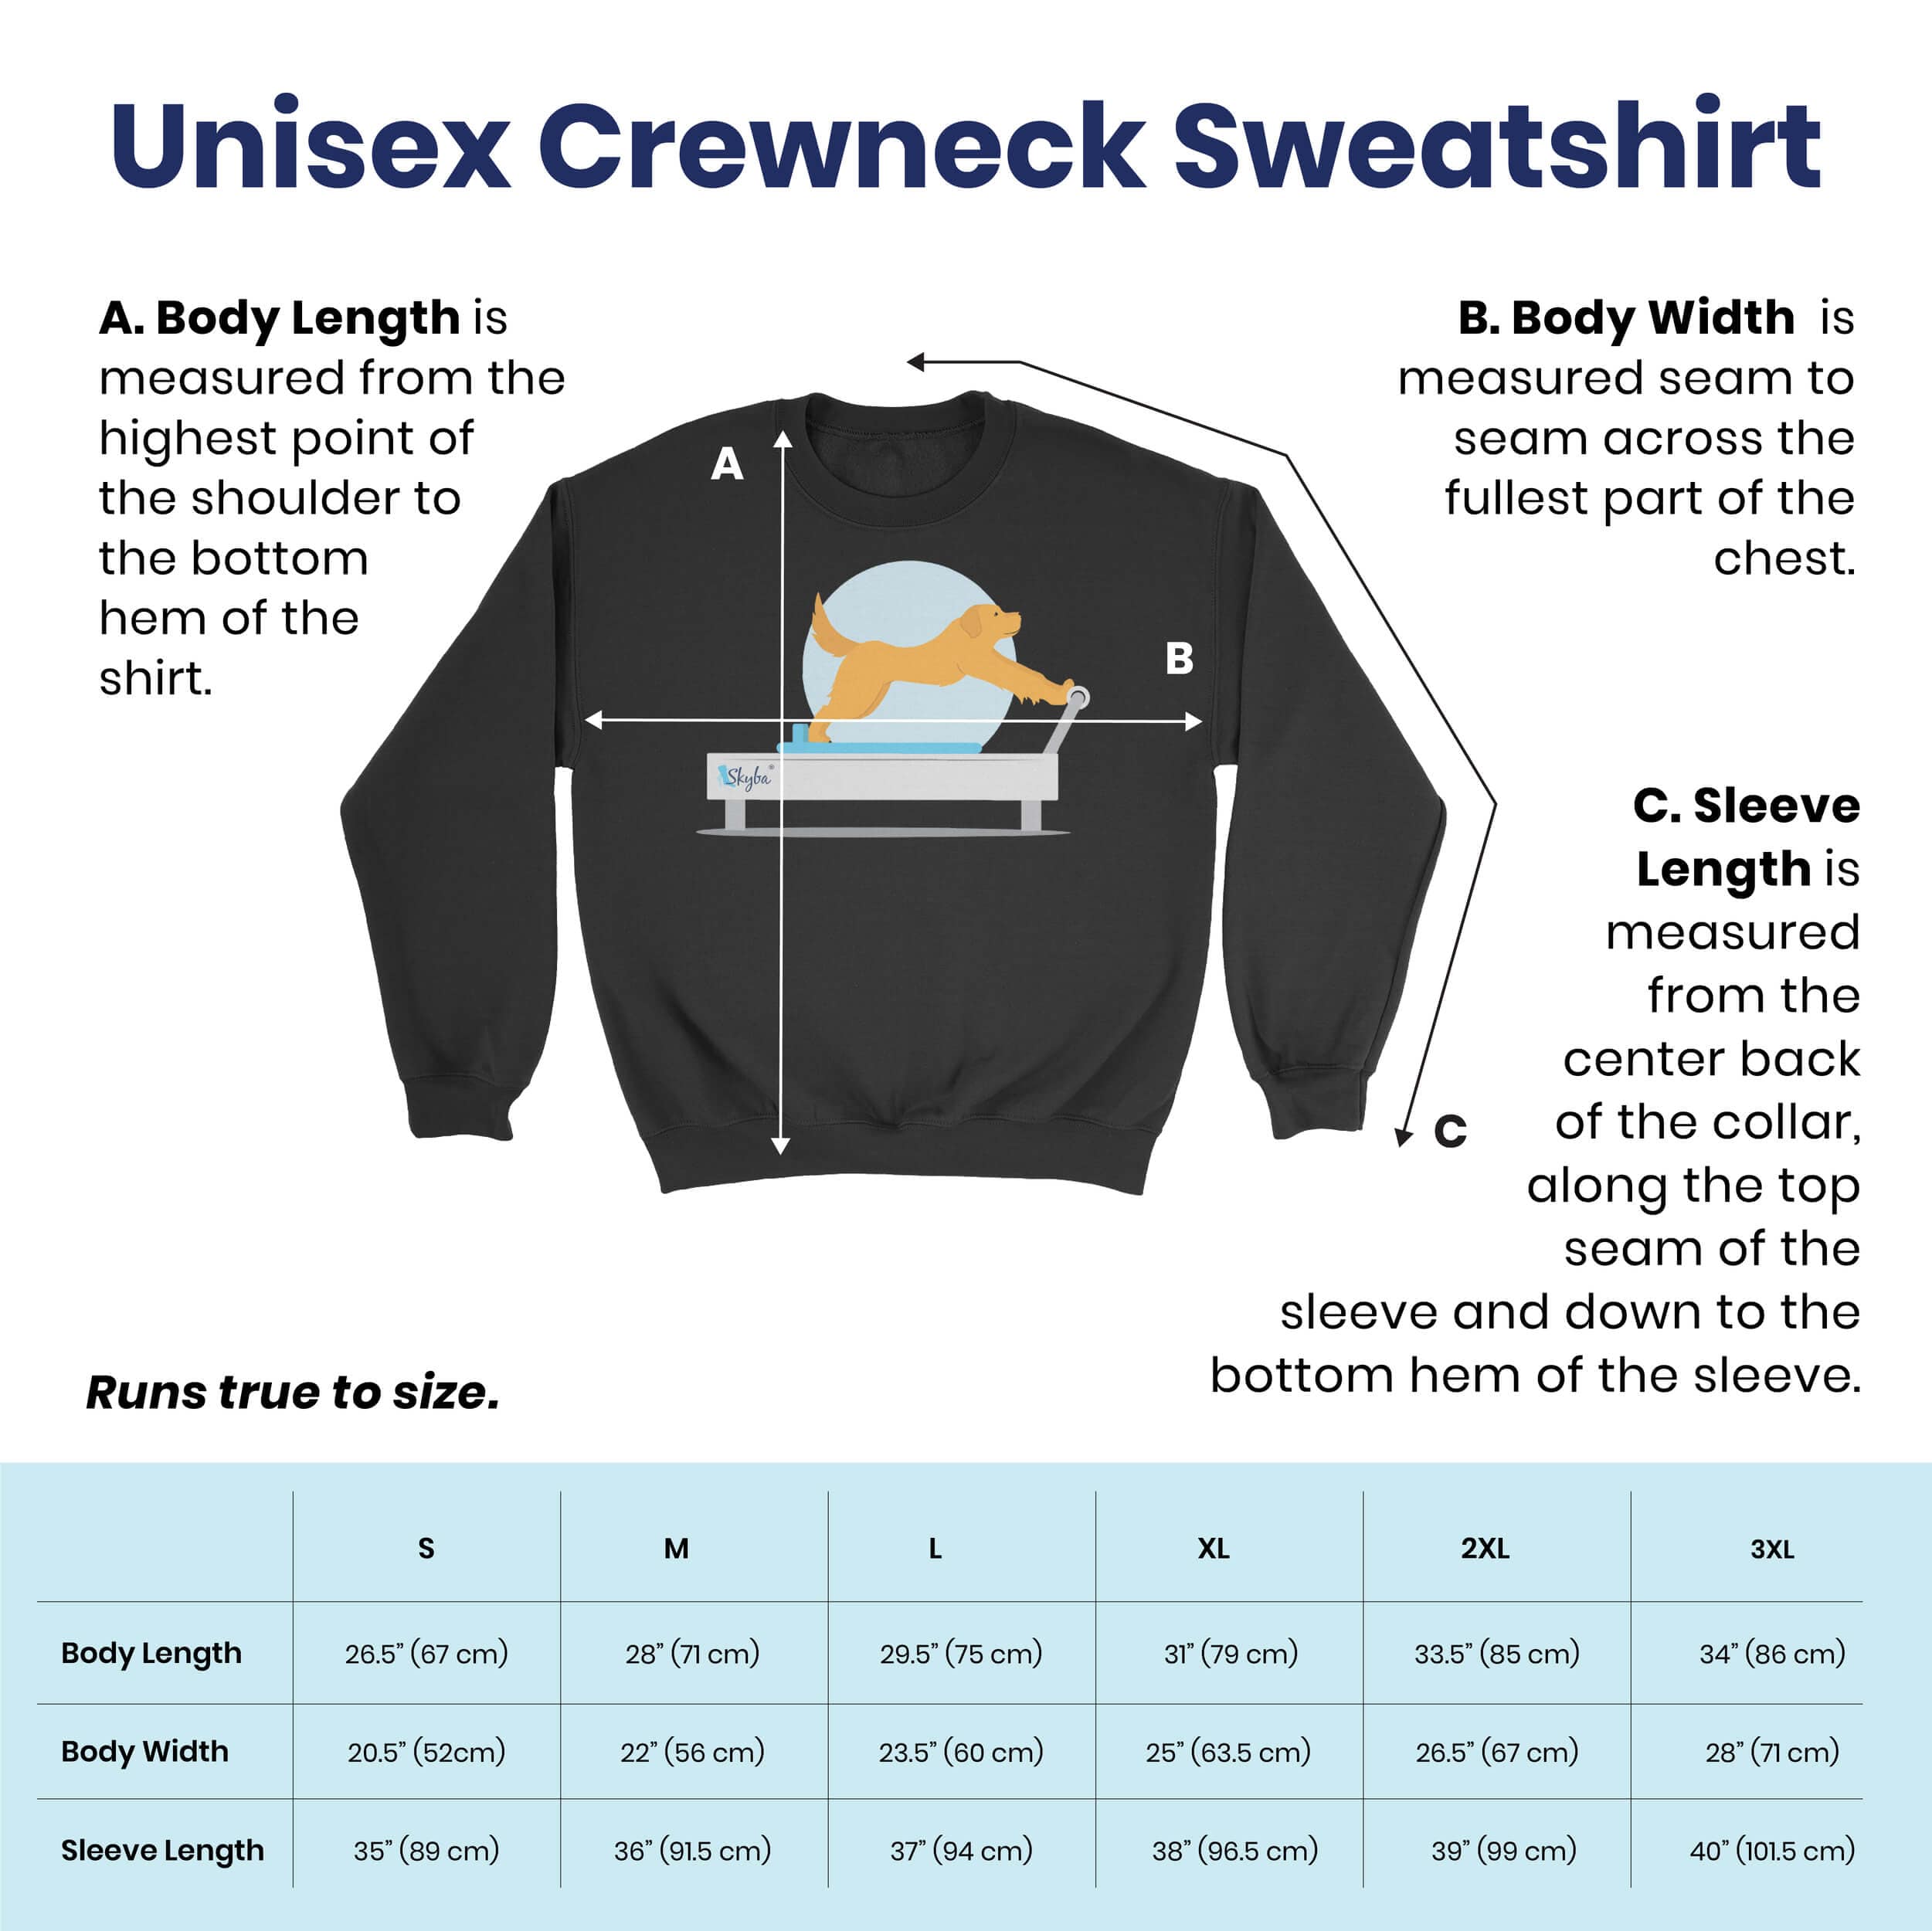 Moonlit Cat on Reformer - Cozy Crewneck Sweatshirt Skyba Sweatshirt